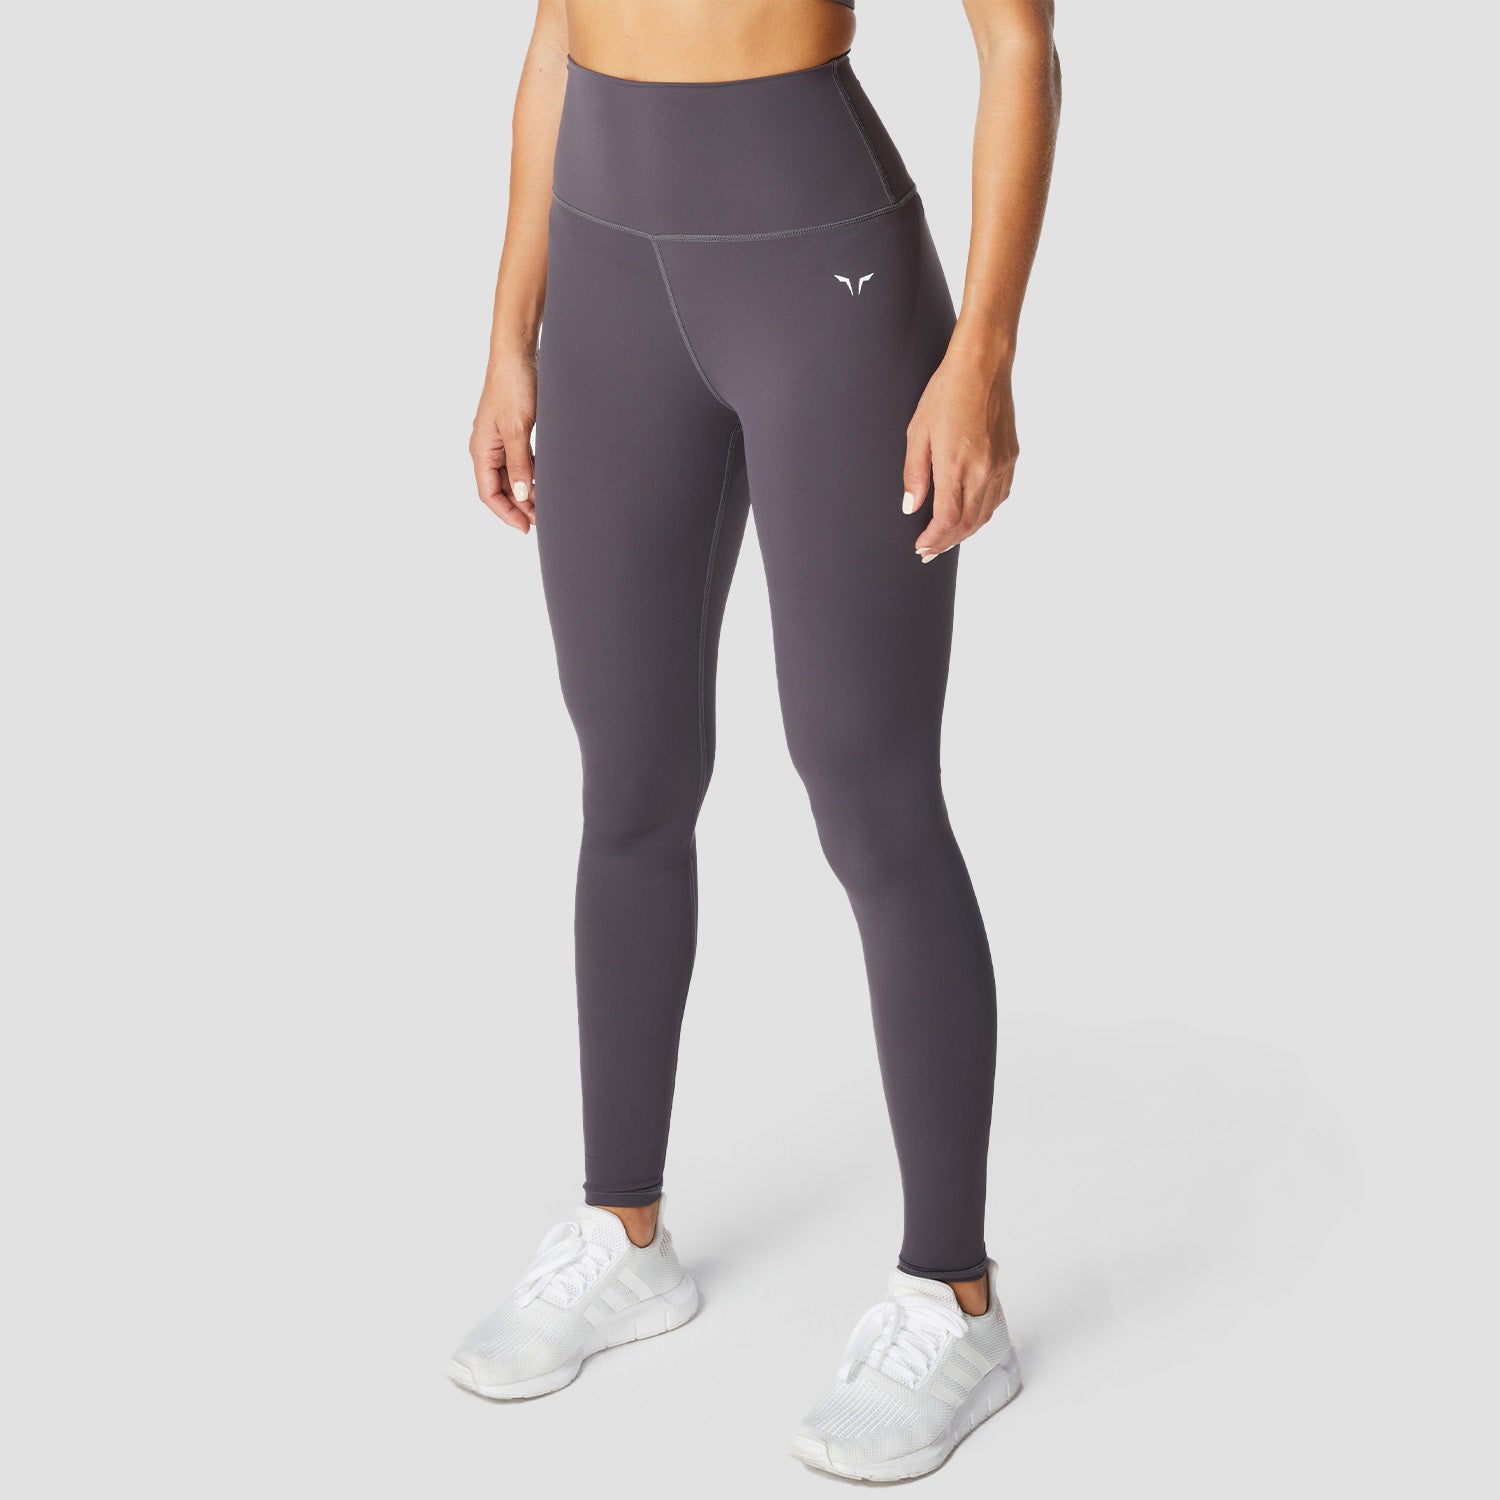 squatwolf-workout-clothes-core-agile-leggings-charcoal-gym-leggings-for-women